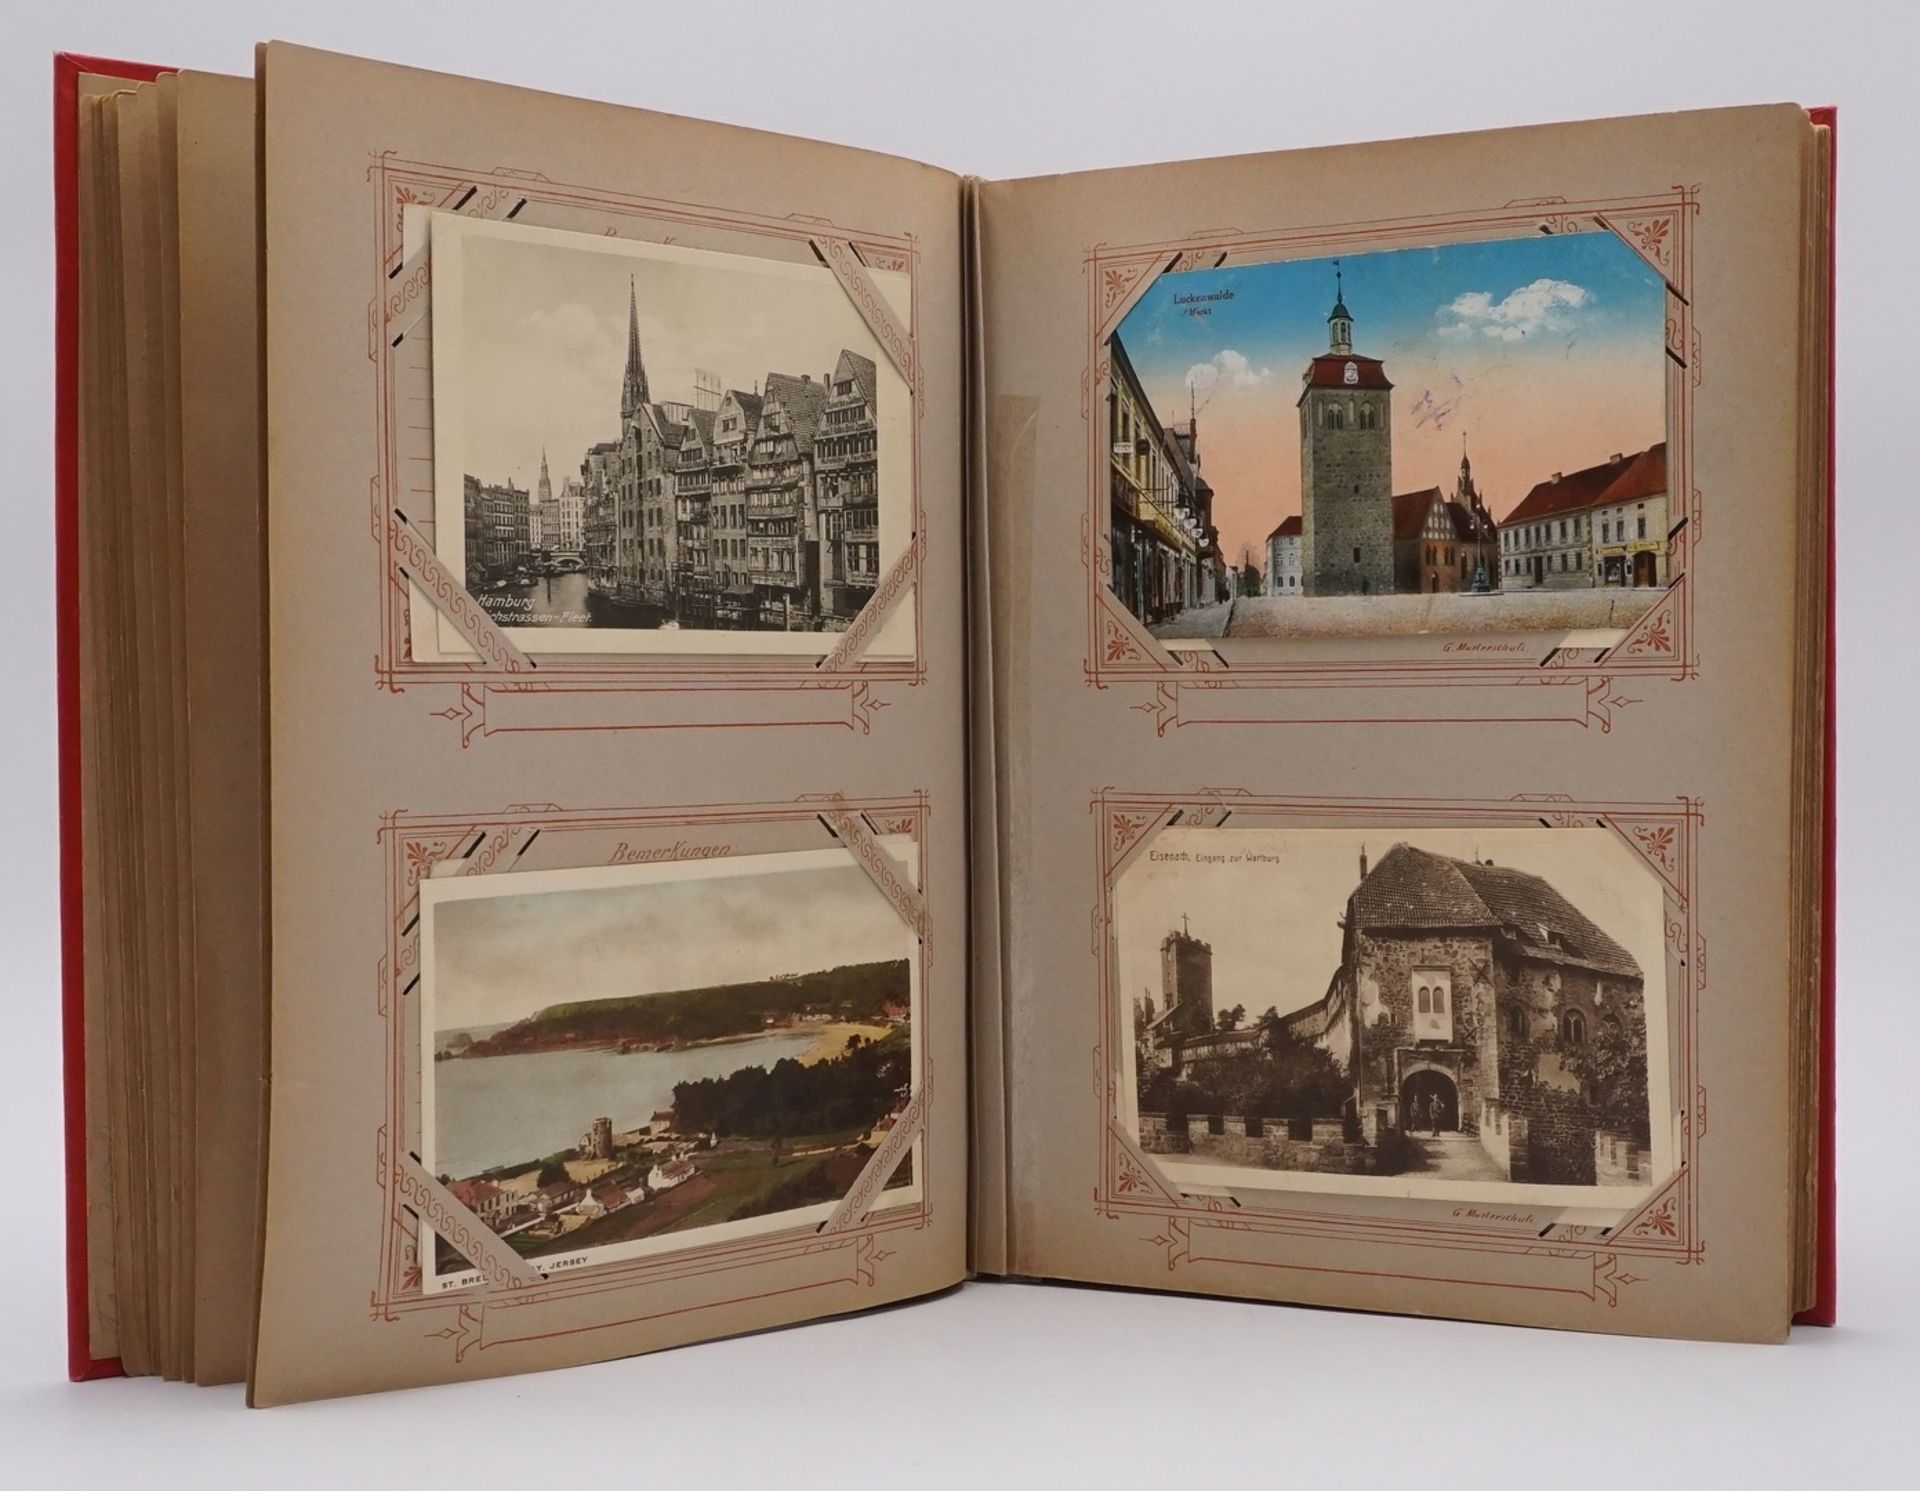 78 Ansichtskarten / Postkartenum 1900 - 1930, im original Jugendstil Album, unter anderem Hamburg, - Image 4 of 5